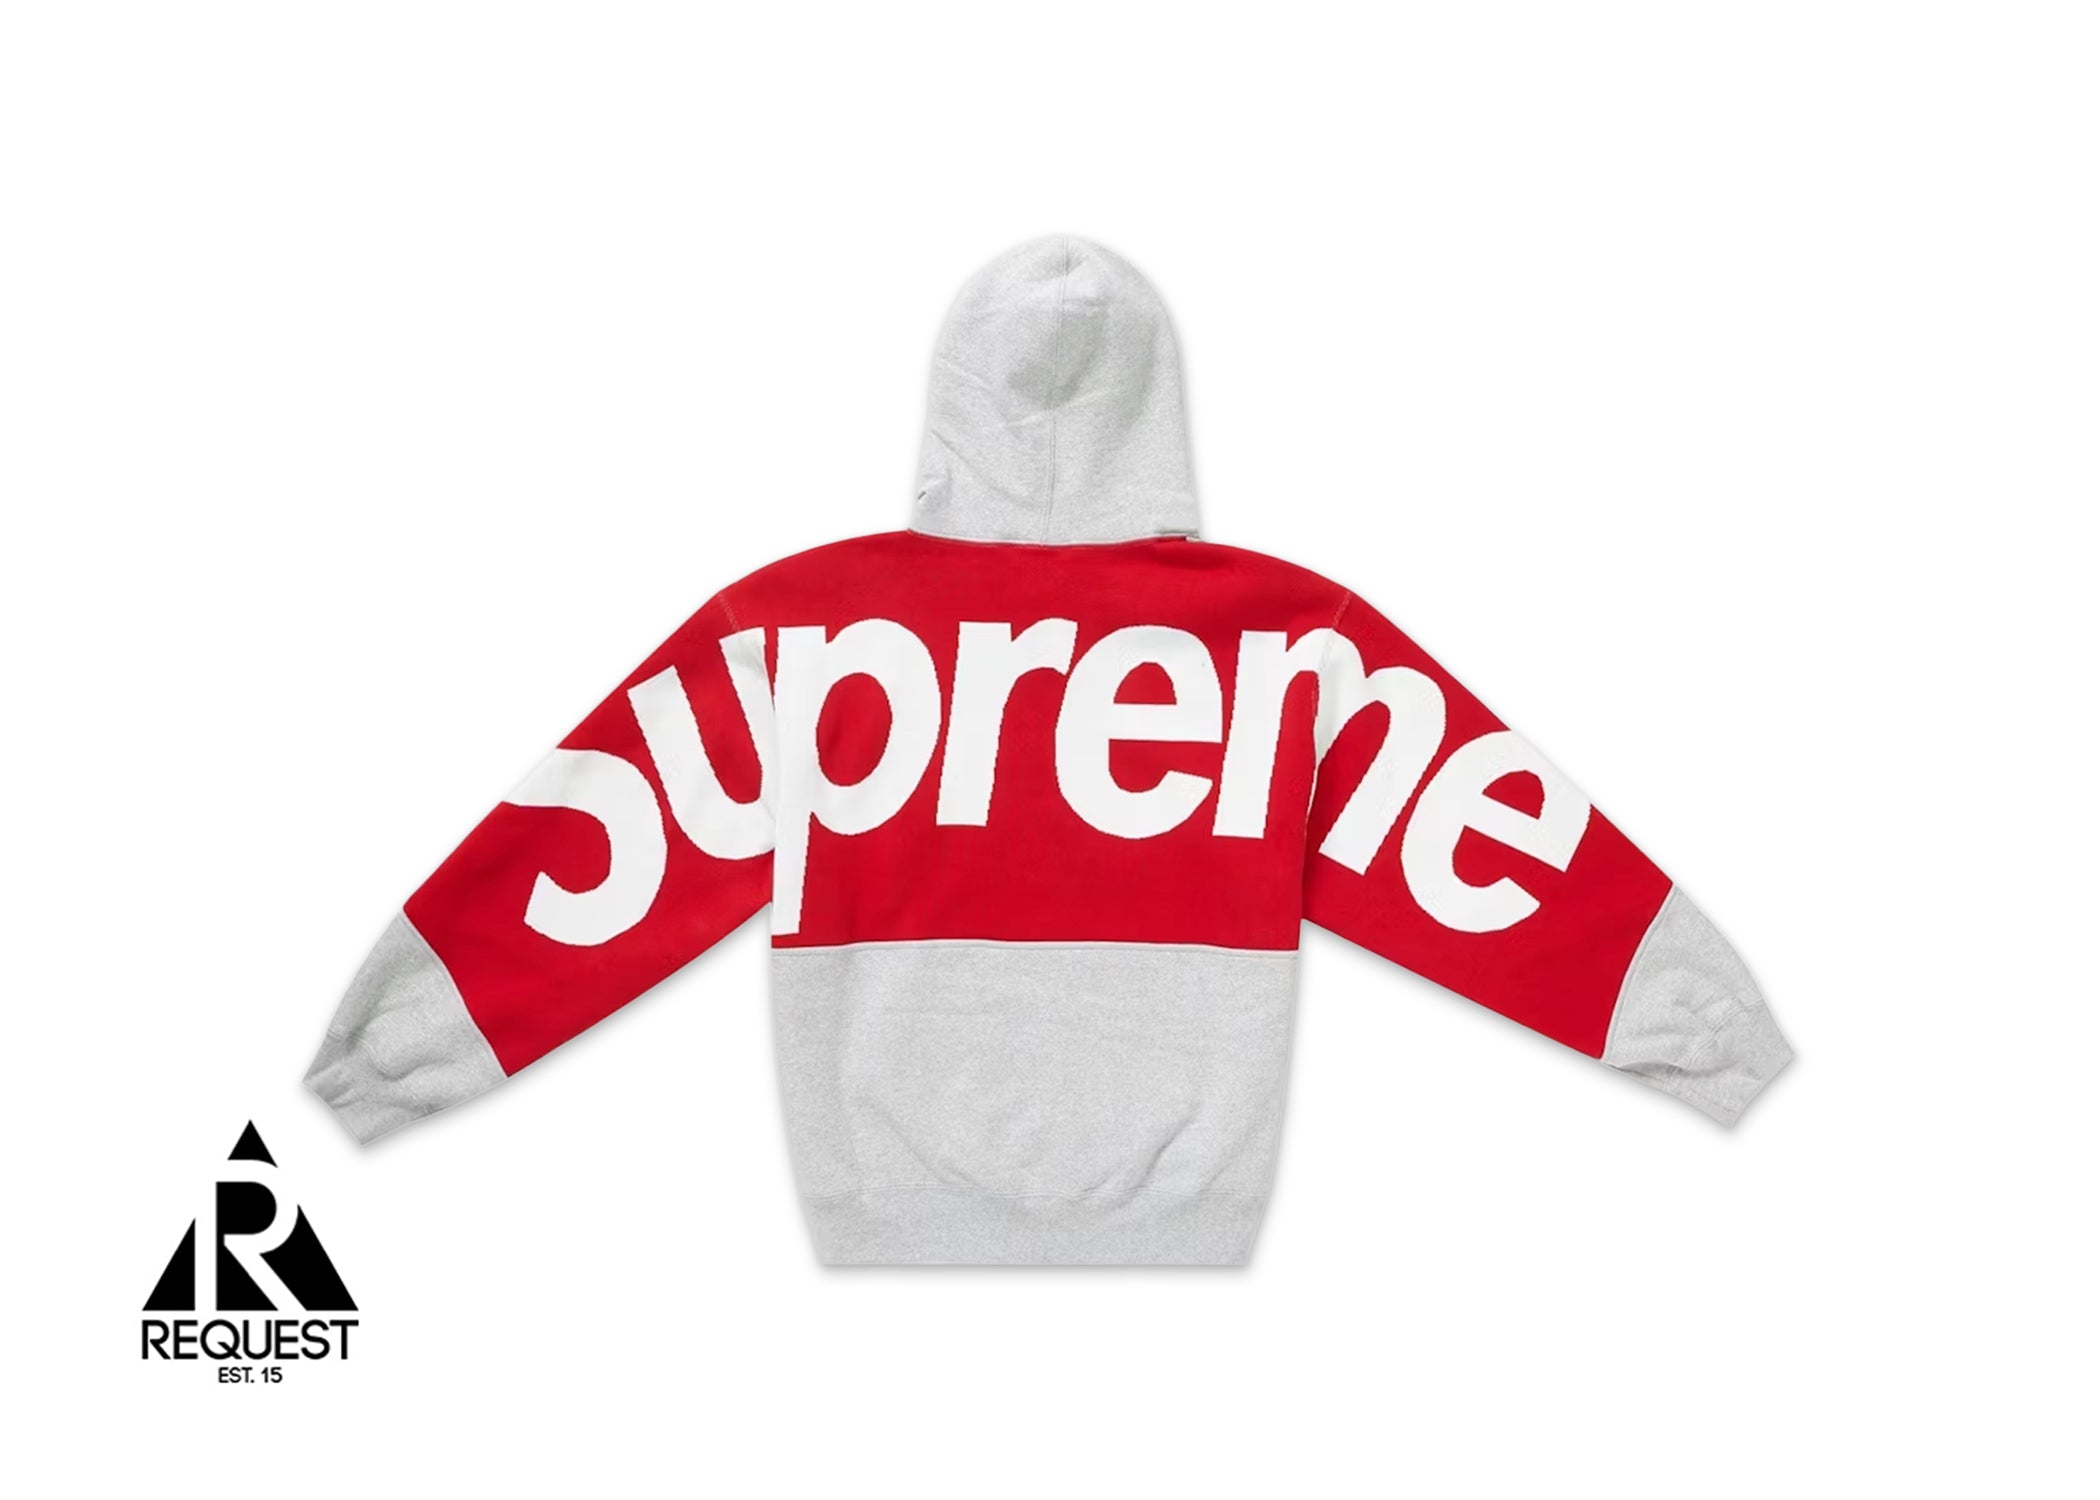 Supreme Big Logo Jacquard Hooded Sweatshirt 